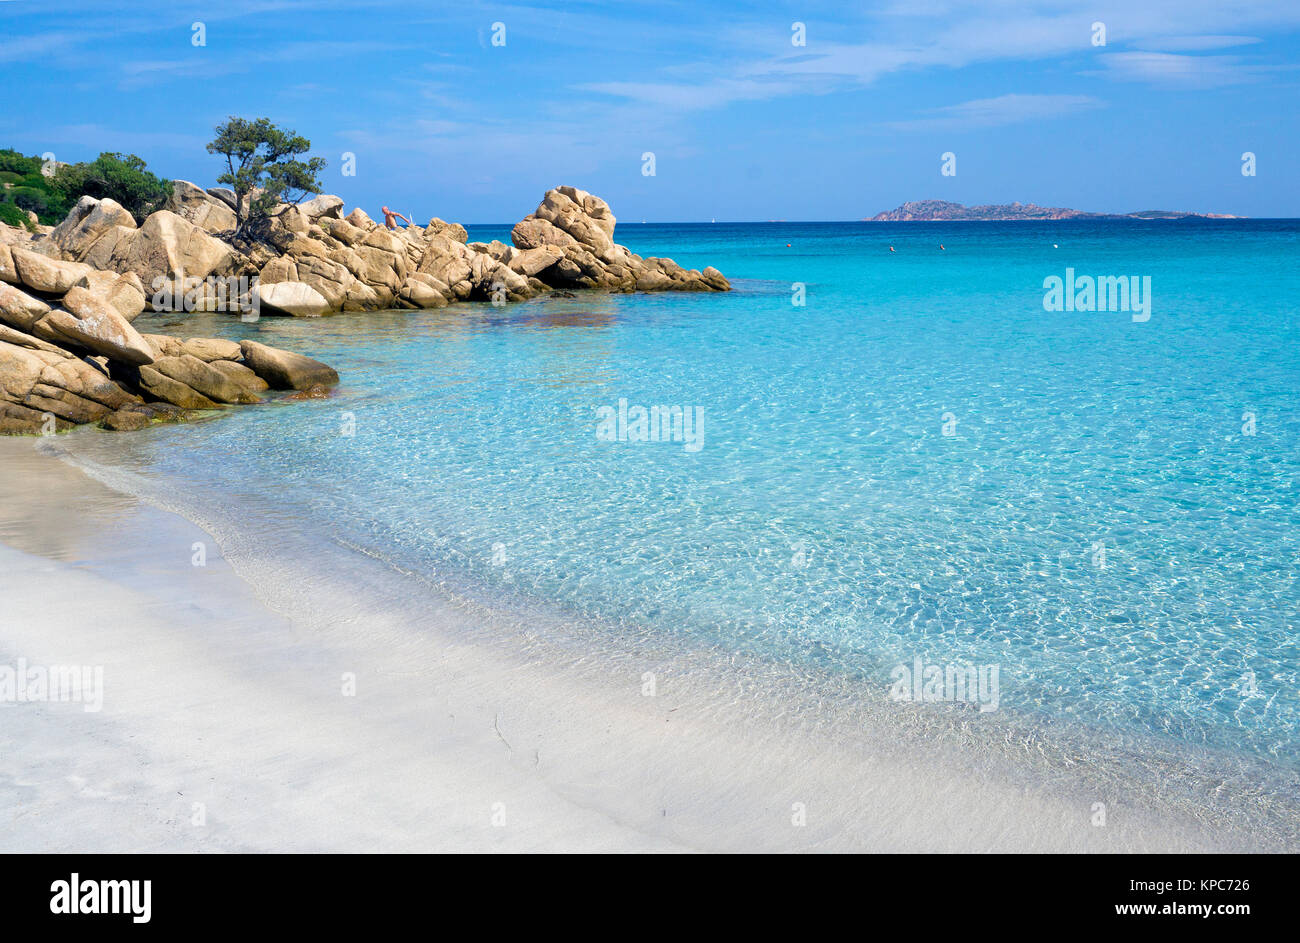 People at idyllic beach with turquoise colour sea and granite rocks at Capriccioli, Costa Smeralda, Sardinia, Italy, Mediterranean sea, Europe Stock Photo